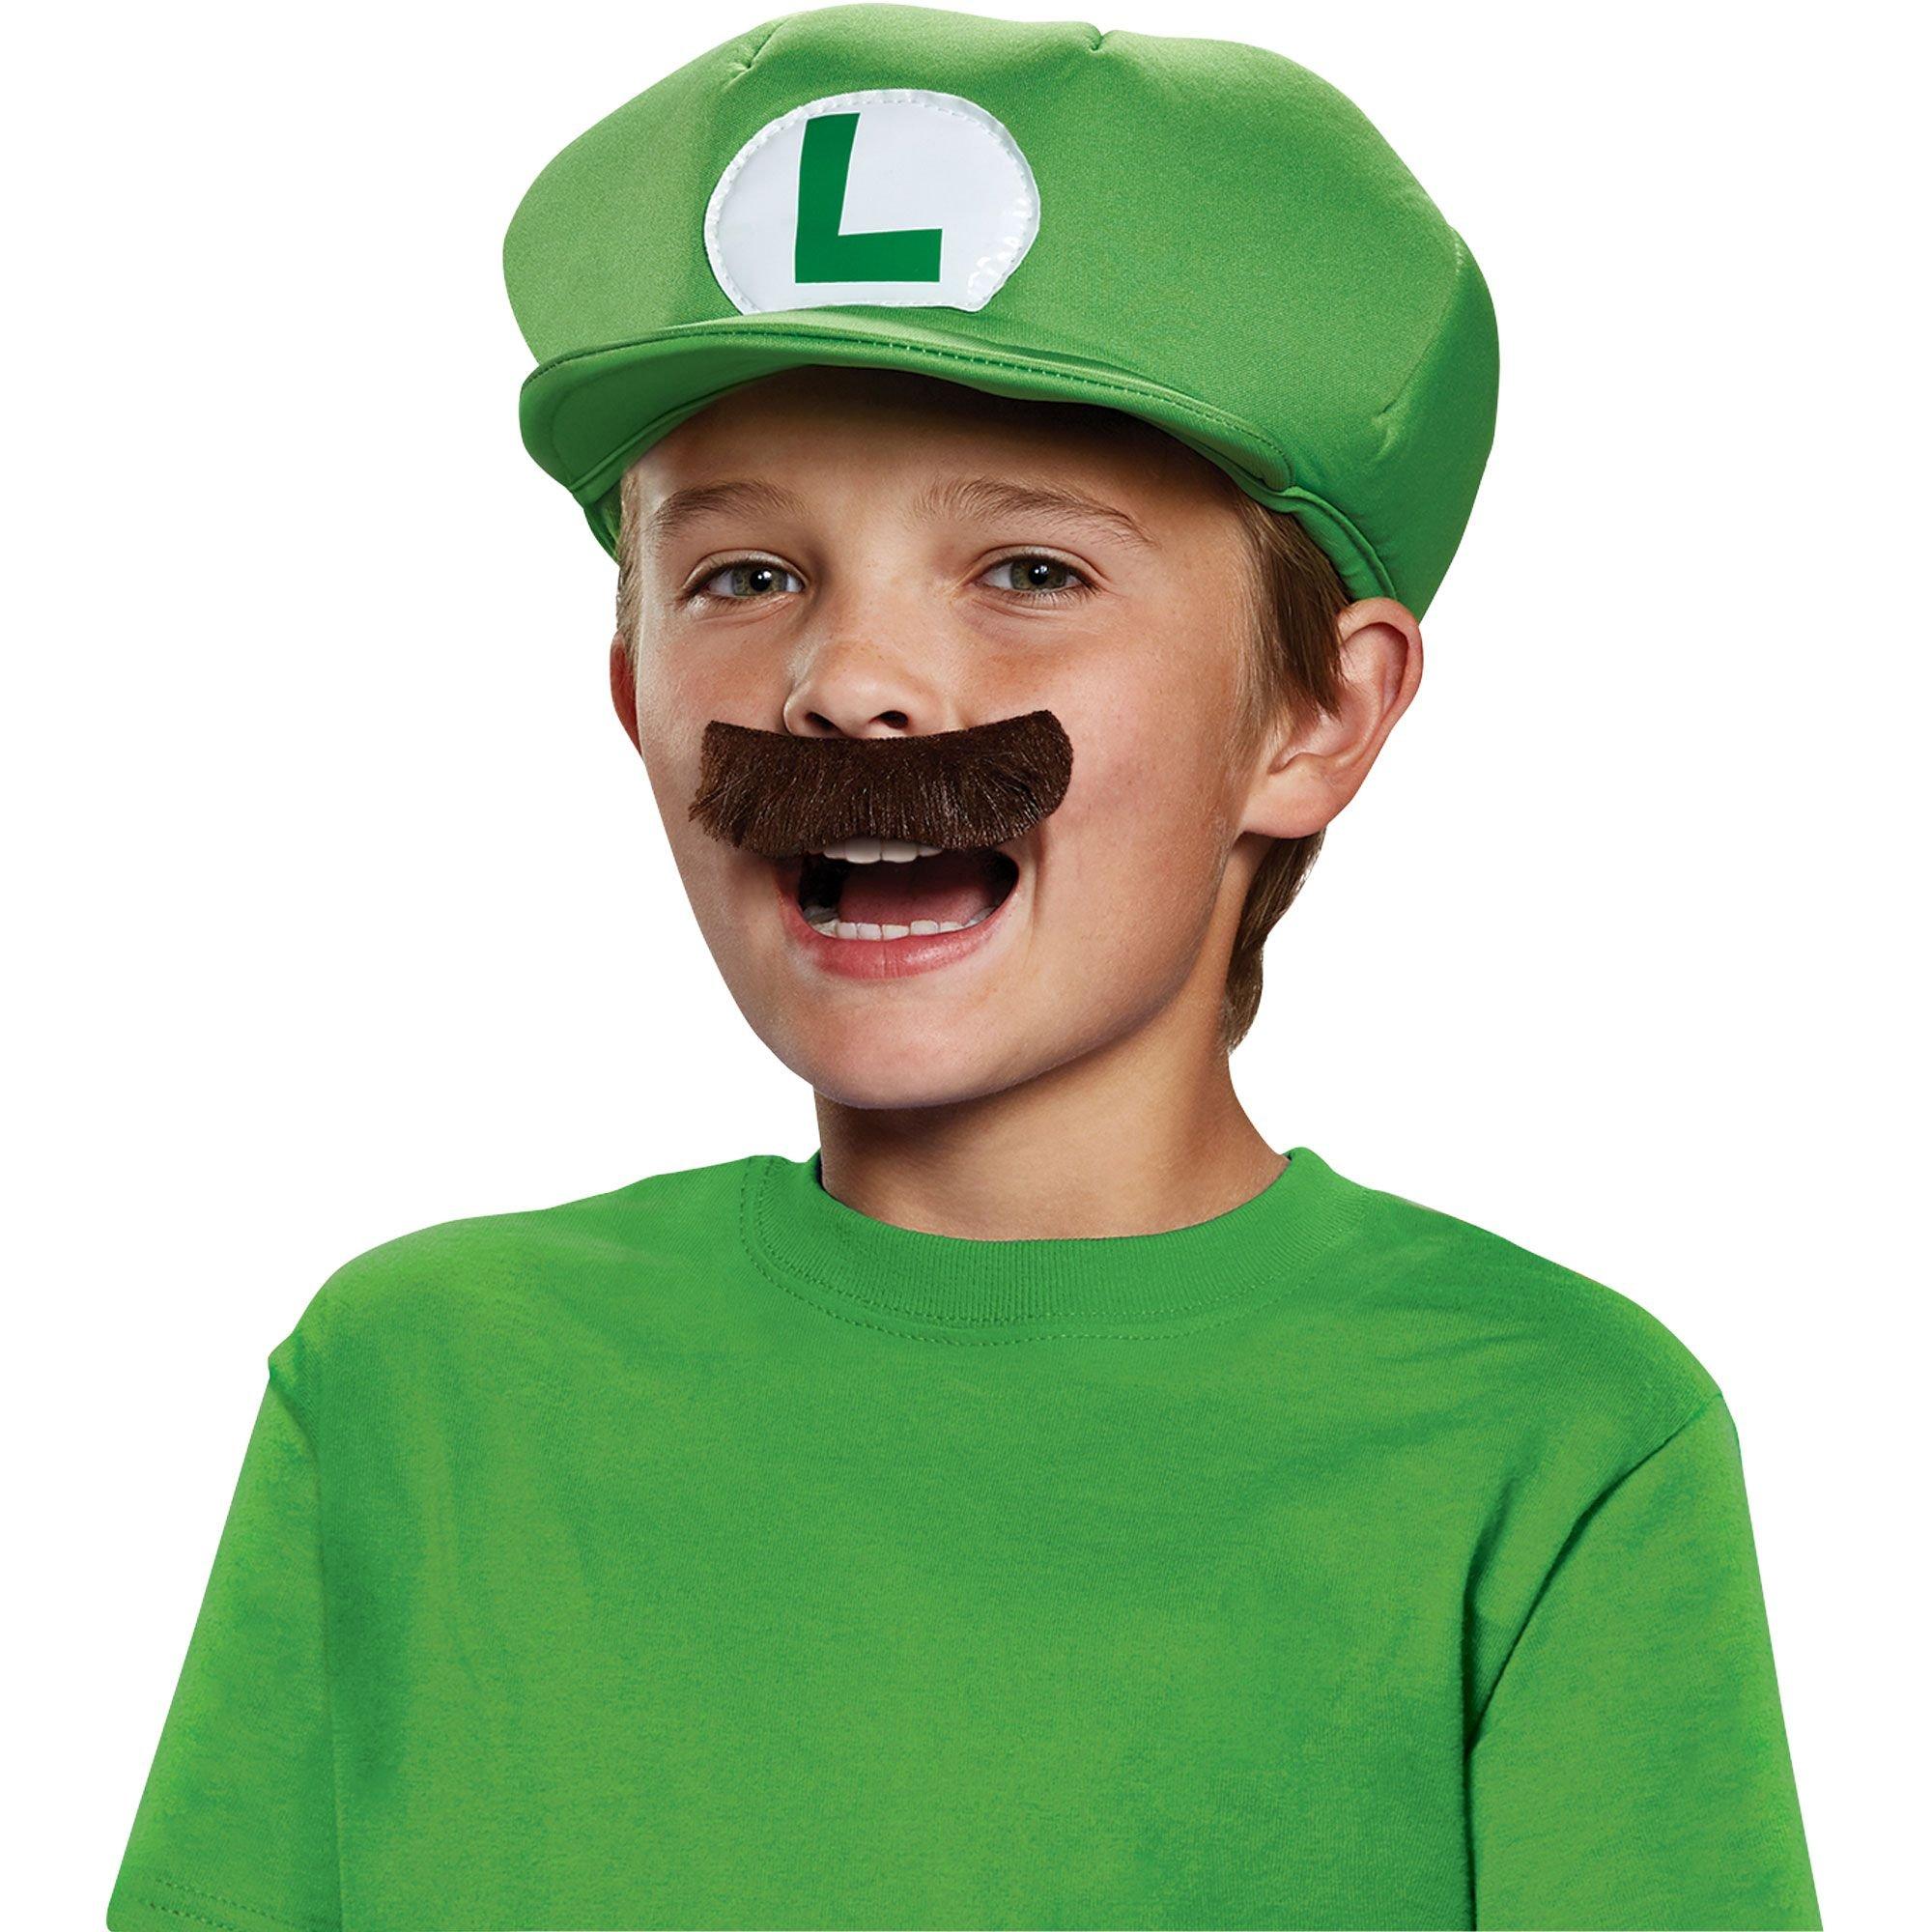 Super Mario Brothers Luigi Costume Kit